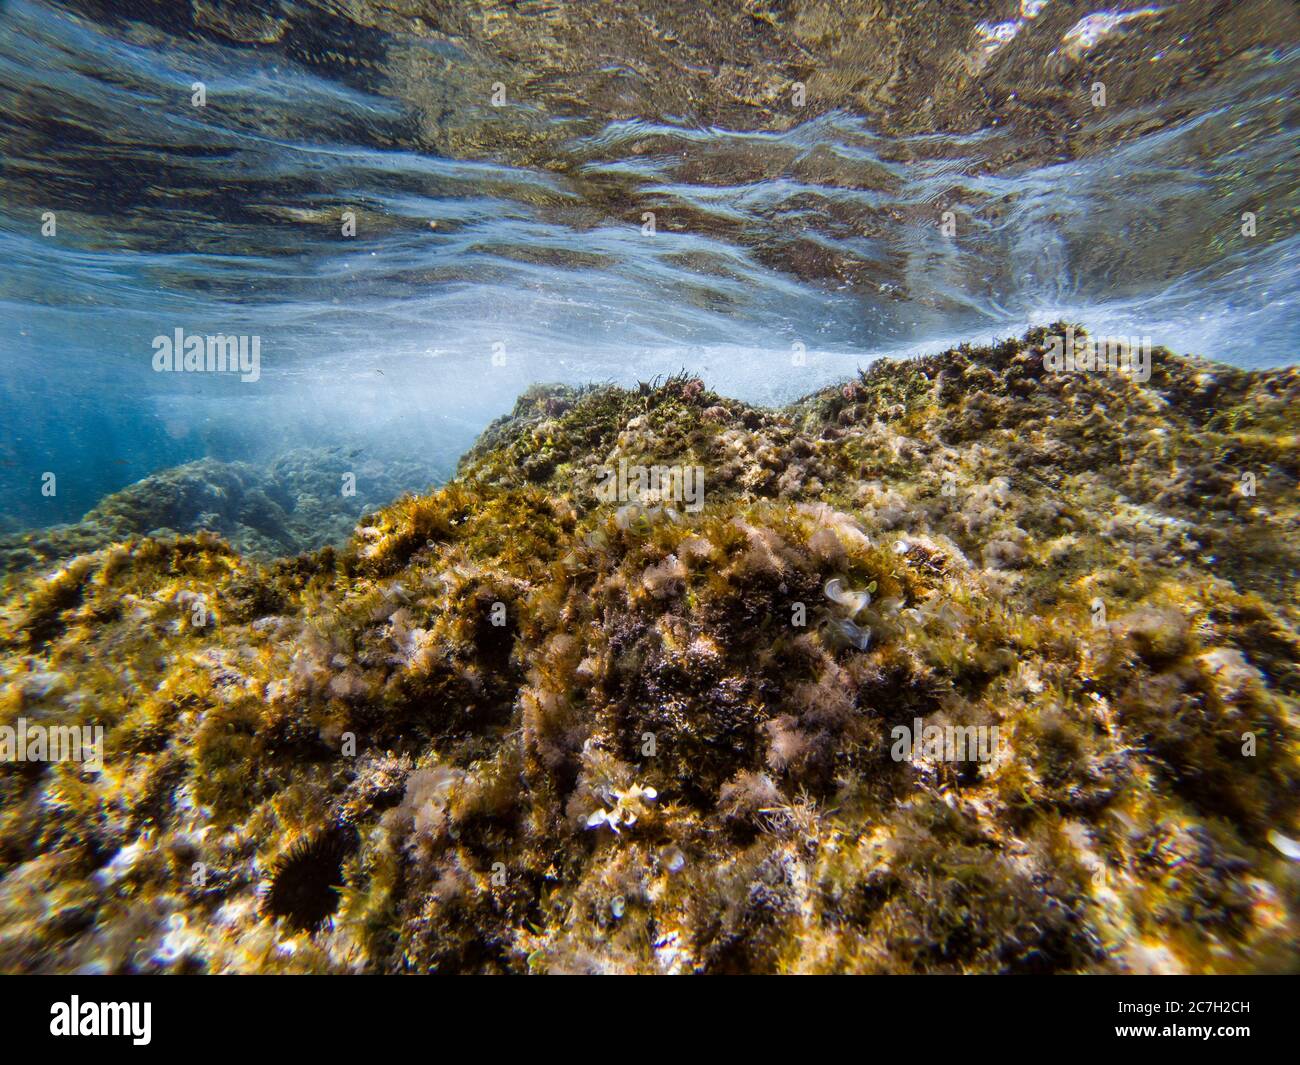 Underwater landscape in Costa Brava, Catalonia, Spain. Summer activities, snorkeling and diving Stock Photo